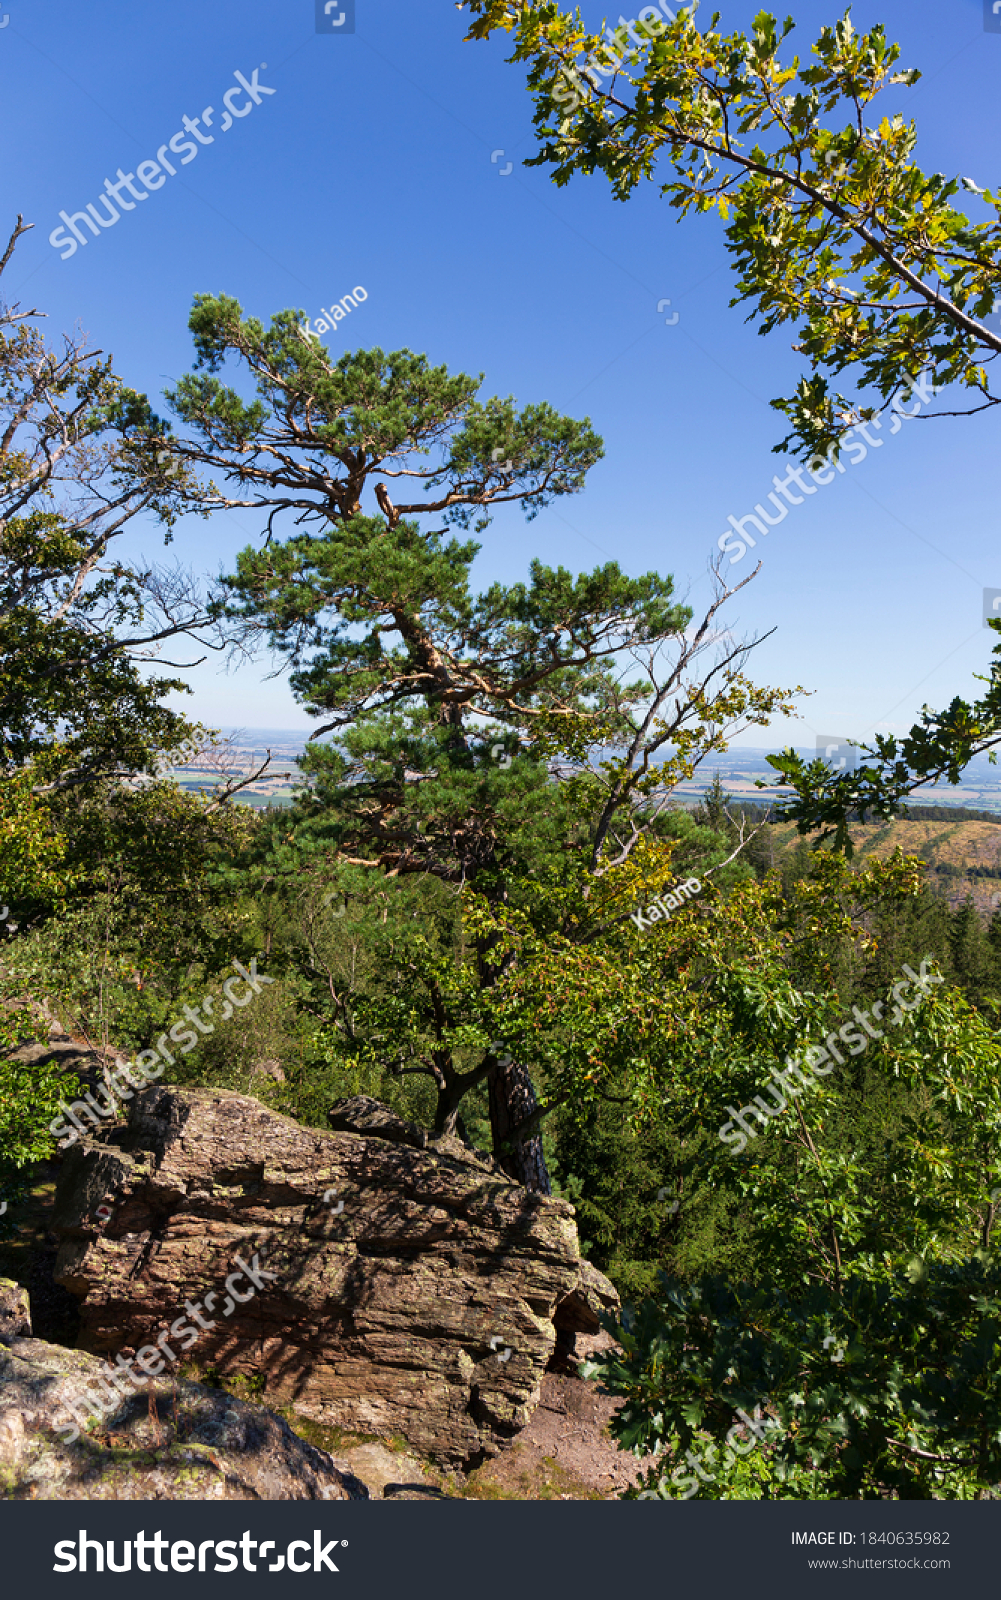 Landscape from the Hill High Rock, Vysoky Kamen, in Rychlebske Mountains, Czech Republic #1840635982